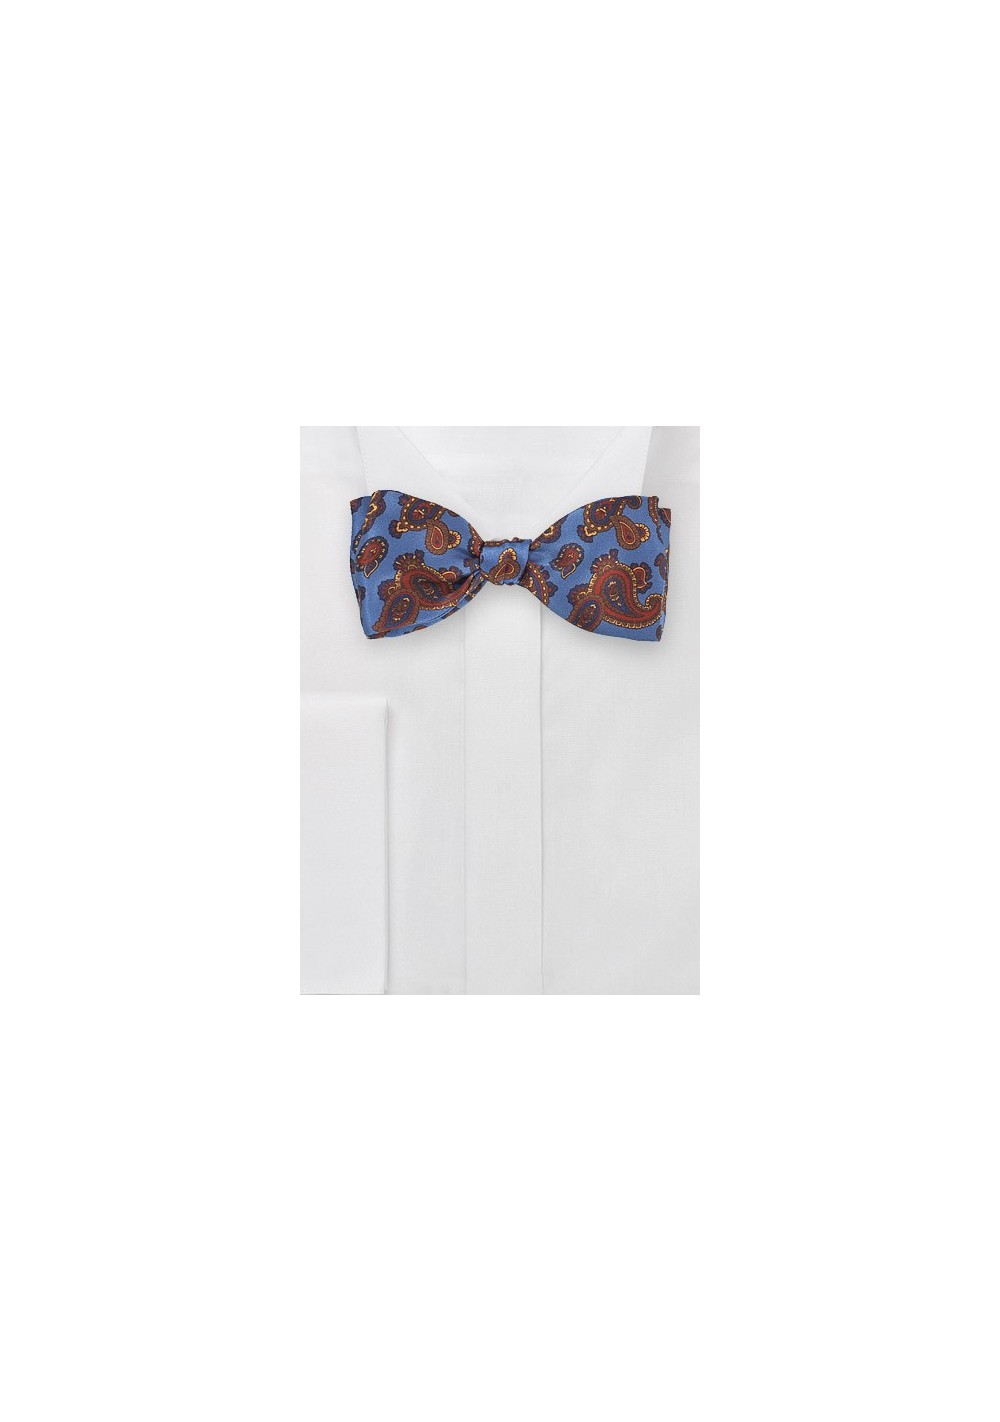 Venetian Blue Paisley Bow Tie